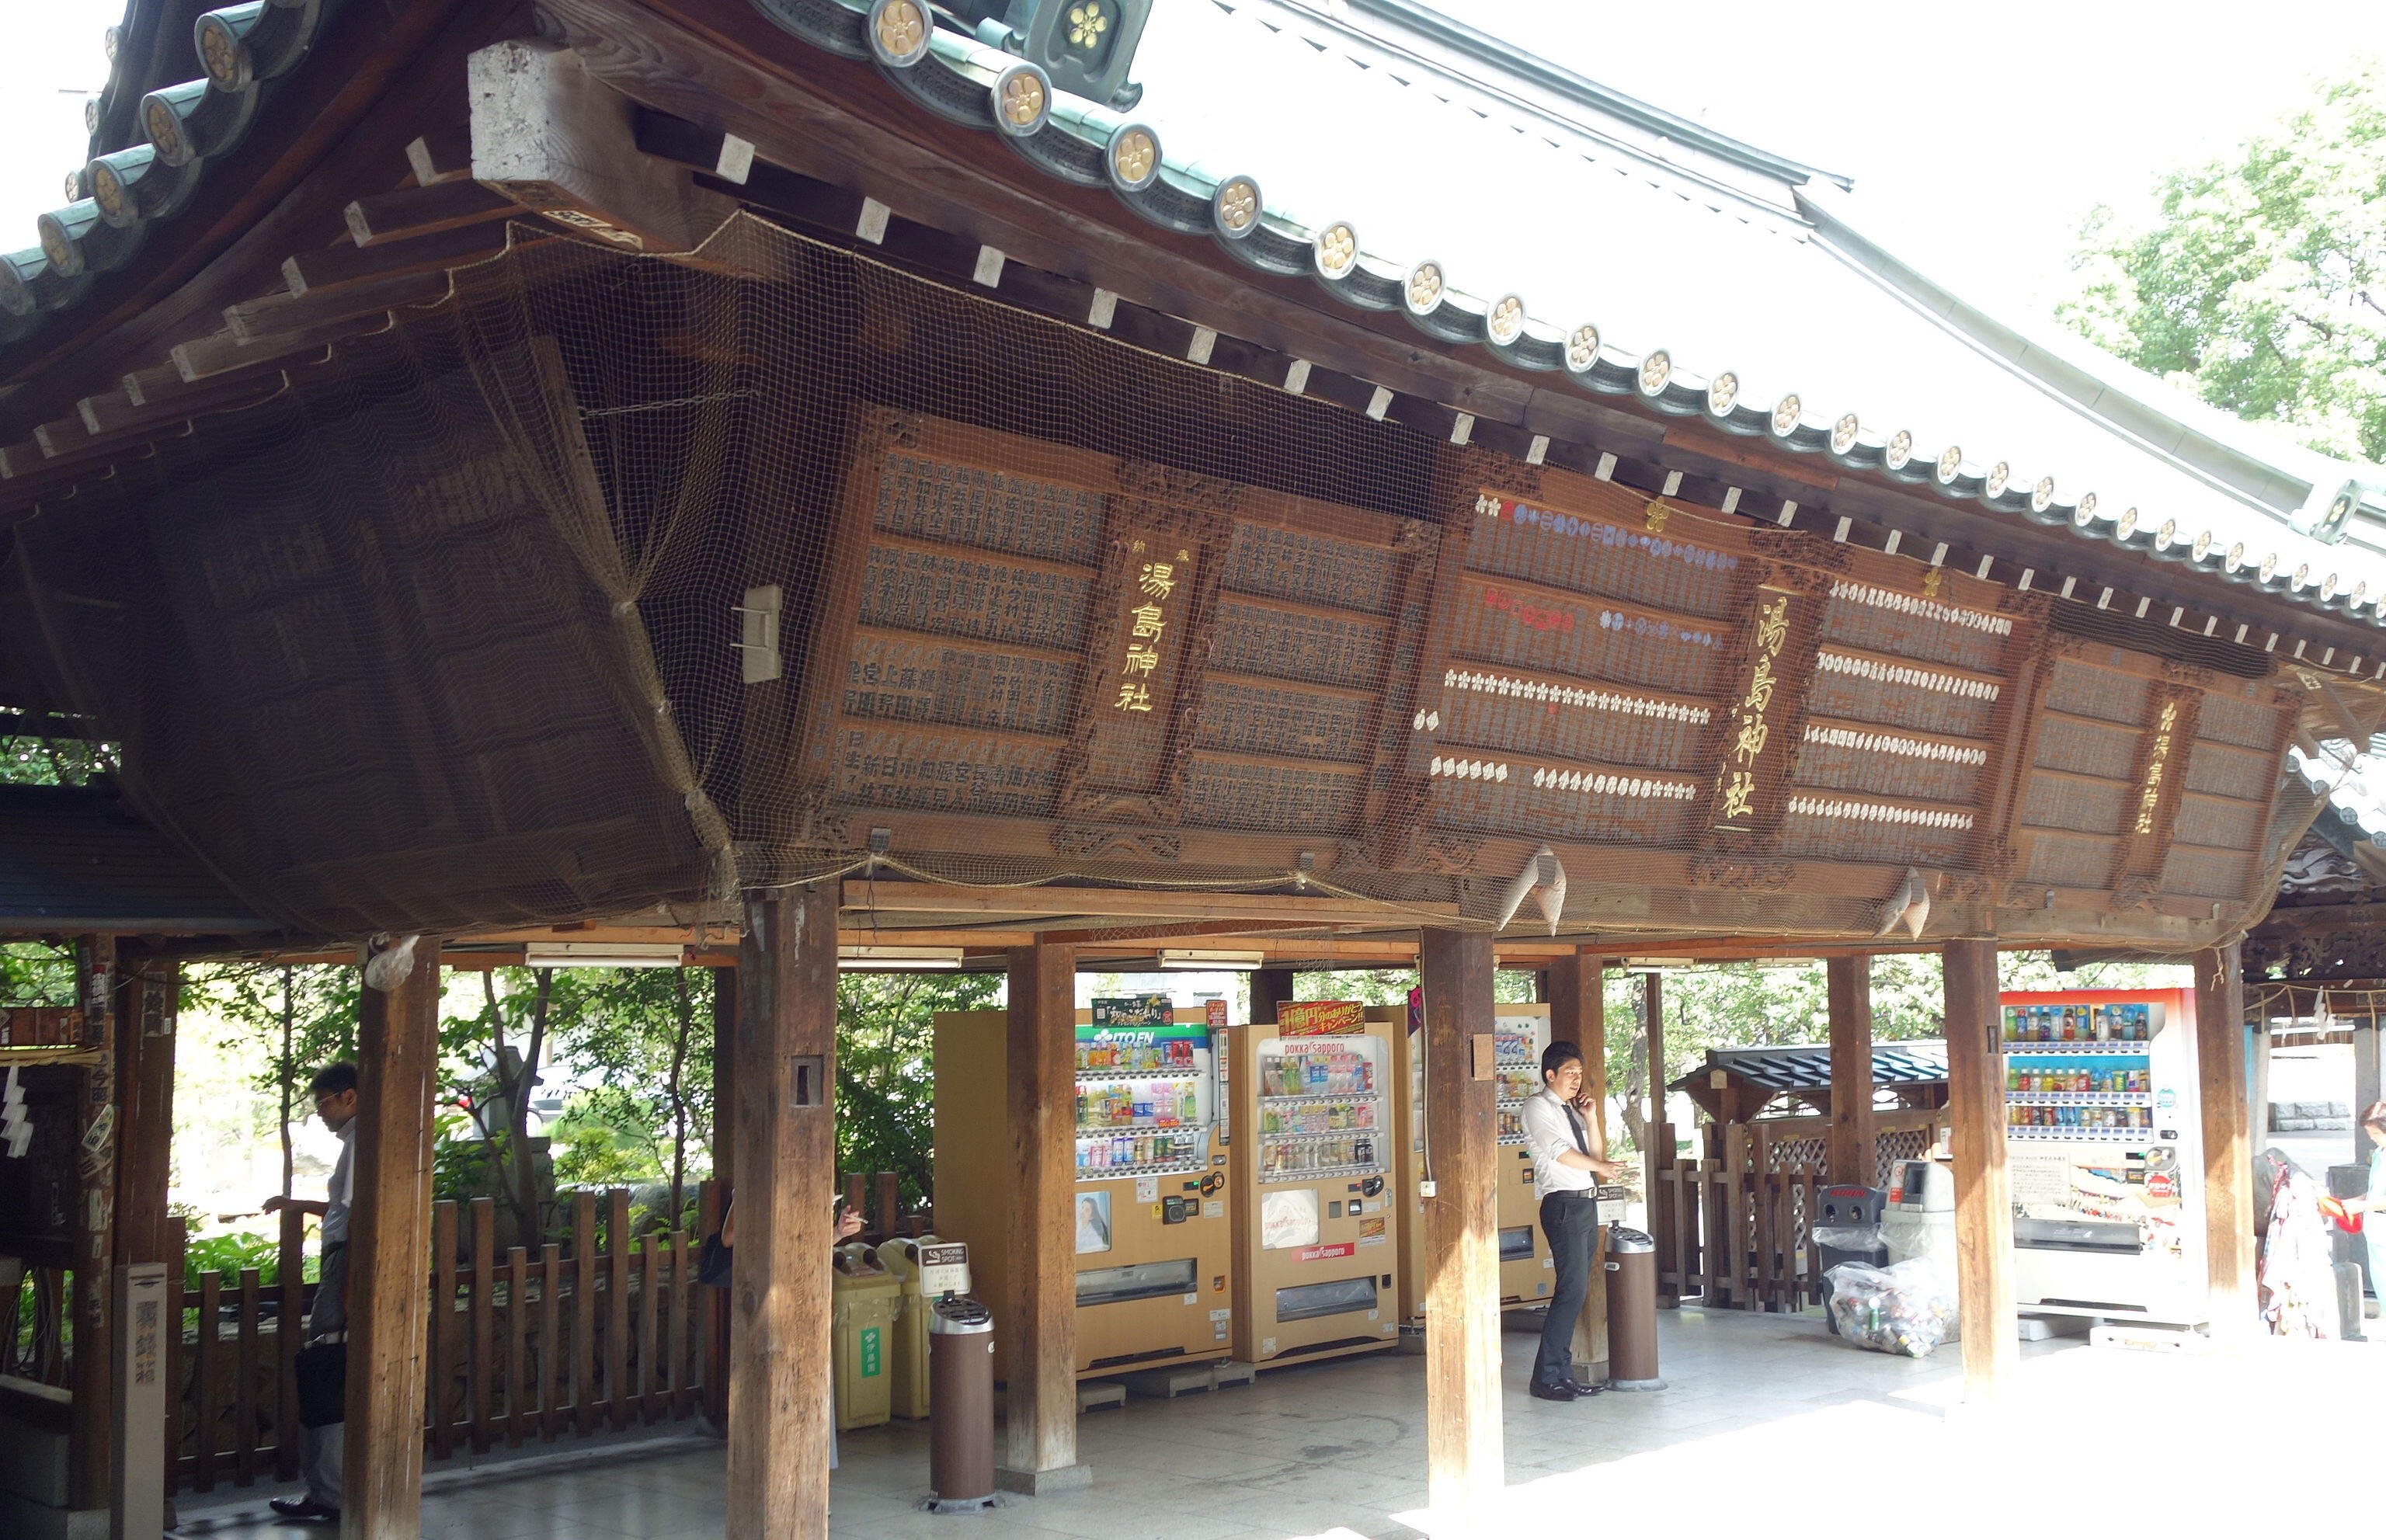 Yushima Tenman-gū Shrine (湯島天満宮) - a Shinto shrine in Tokyo, Japan.